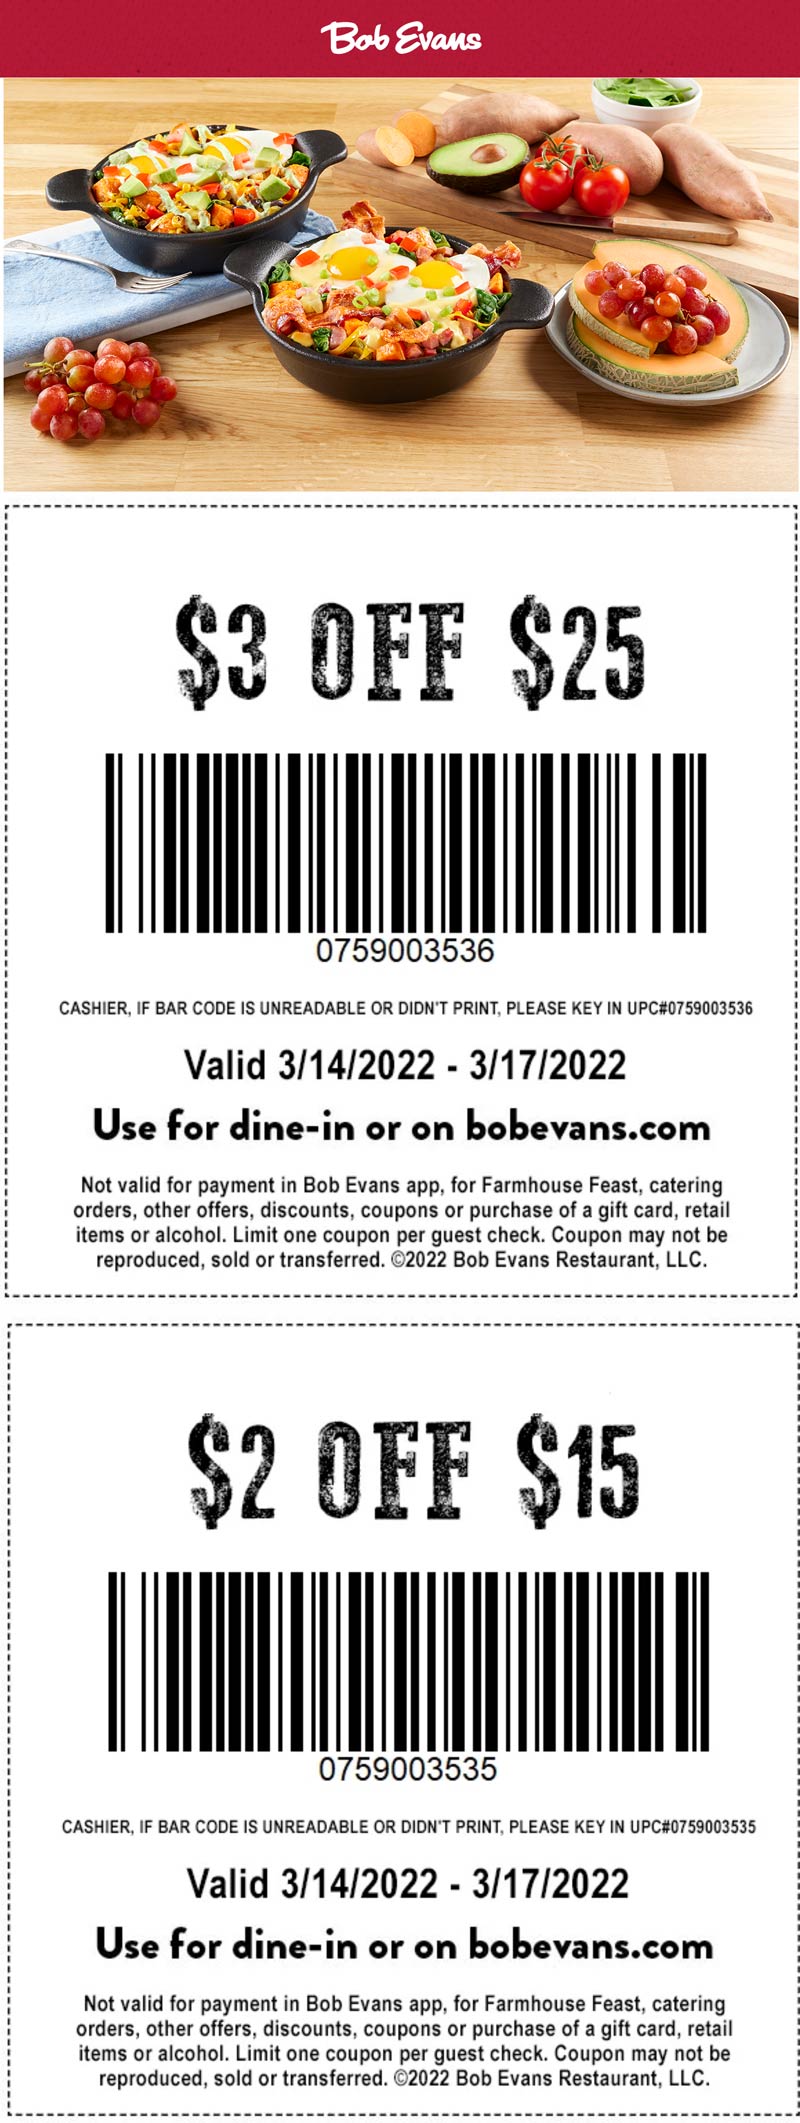 Bob Evans coupons & promo code for [November 2022]